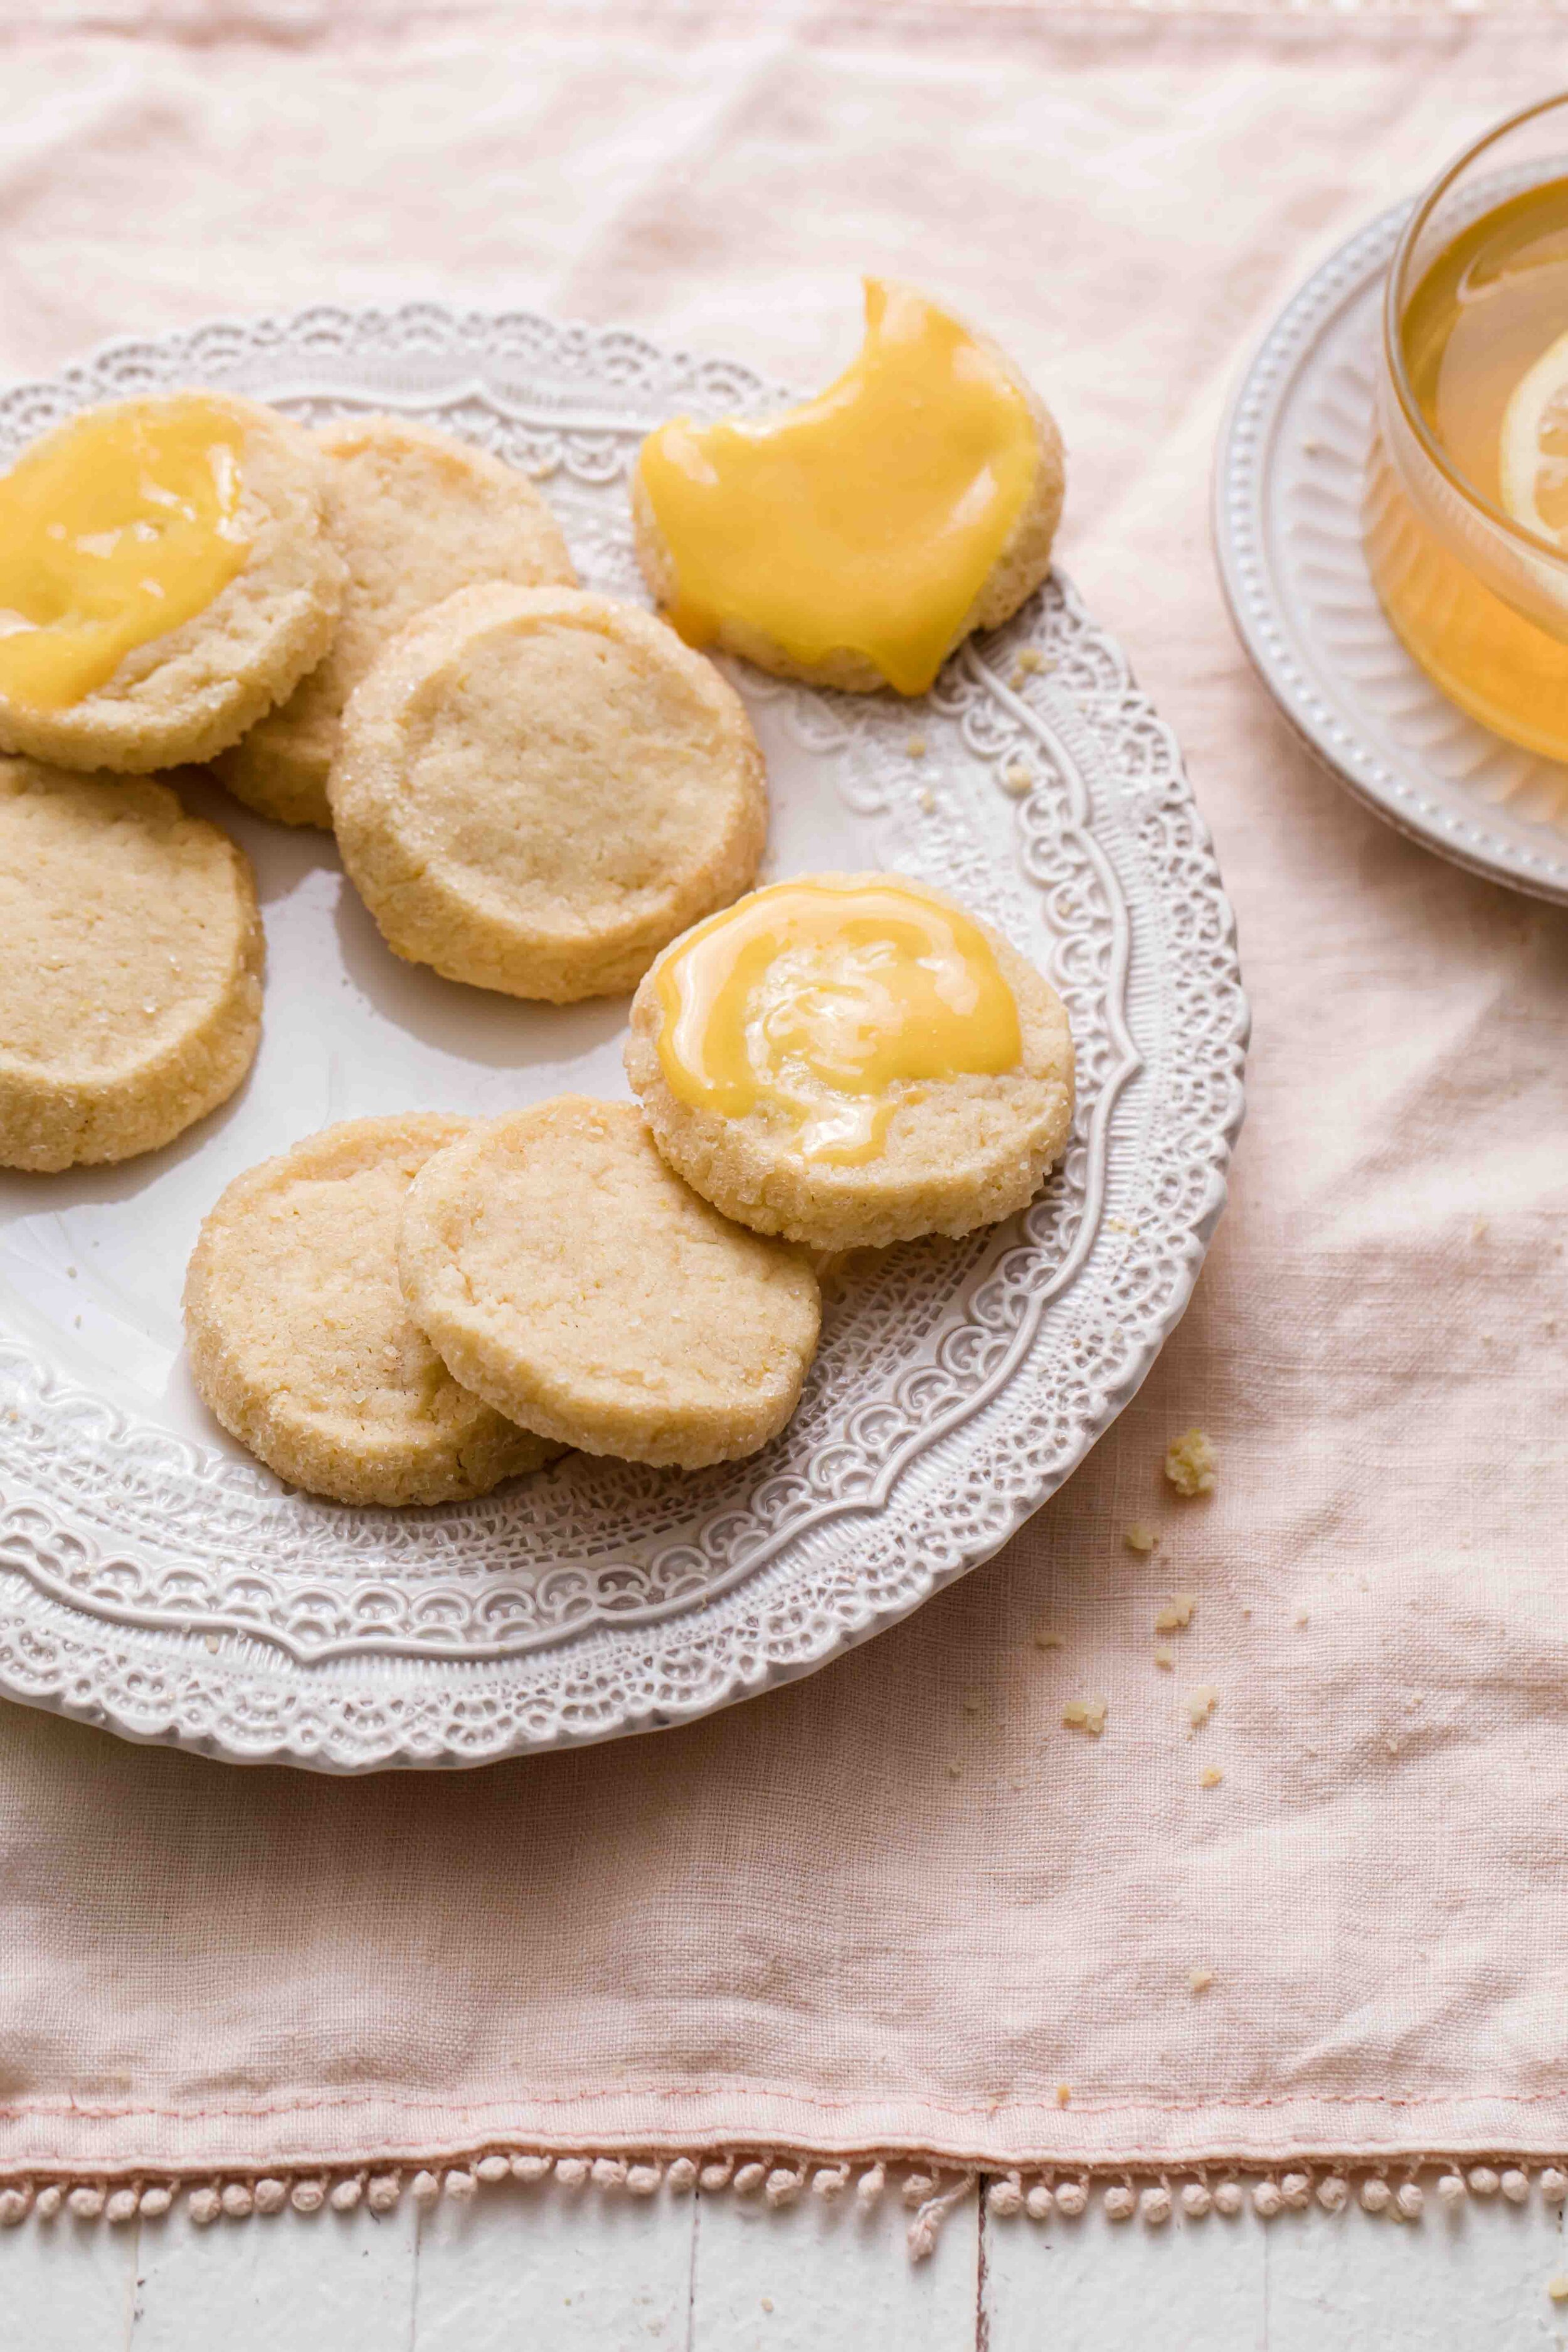 Lemon Curd with shortbread cookies